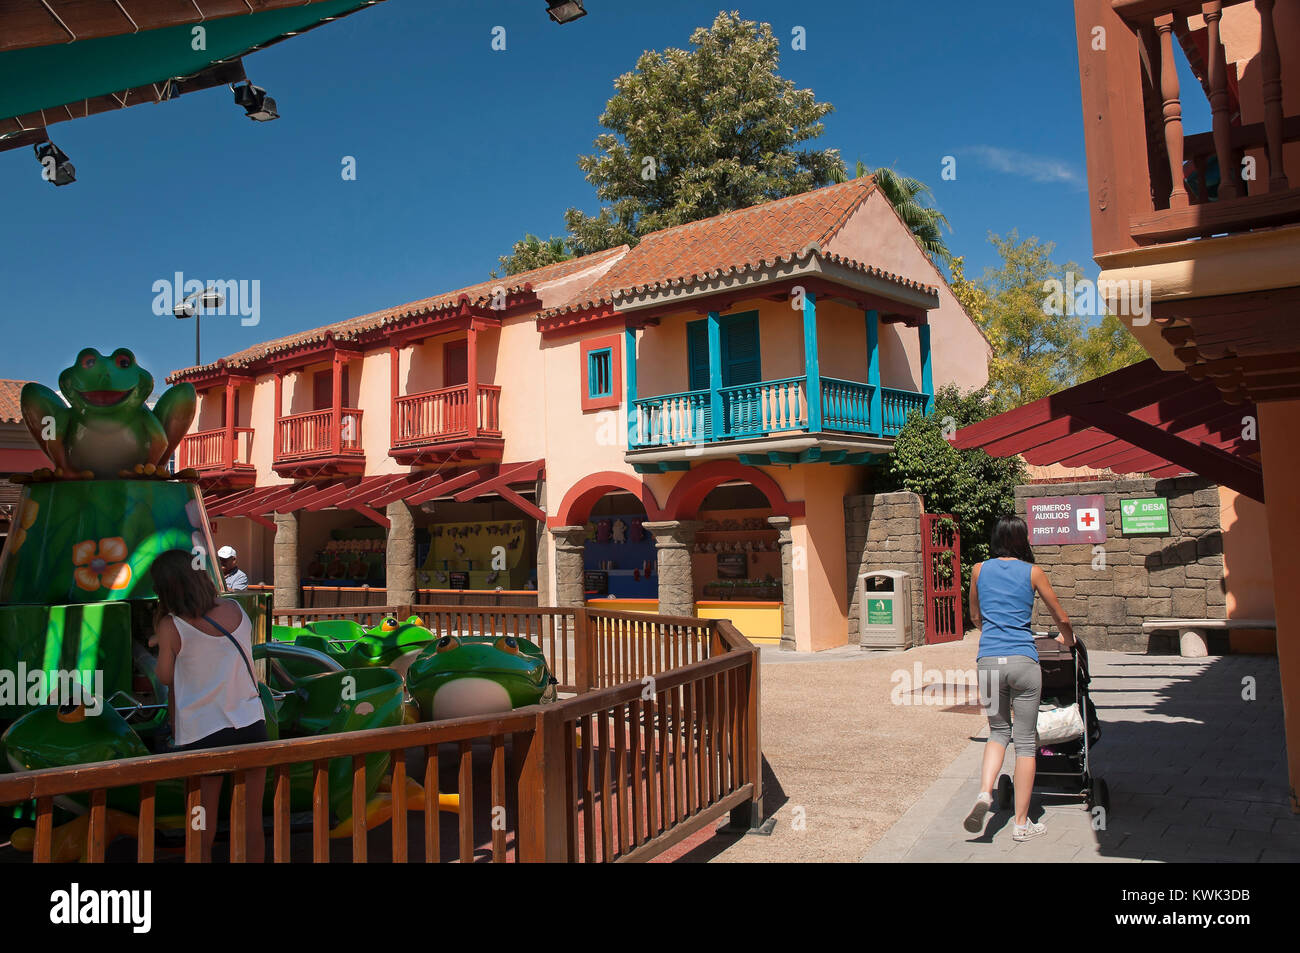 Isla Magica (Magic Island) Theme Park - das Springen Kröte Attraktion, Sevilla, Andalusien, Spanien, Europa Stockfoto